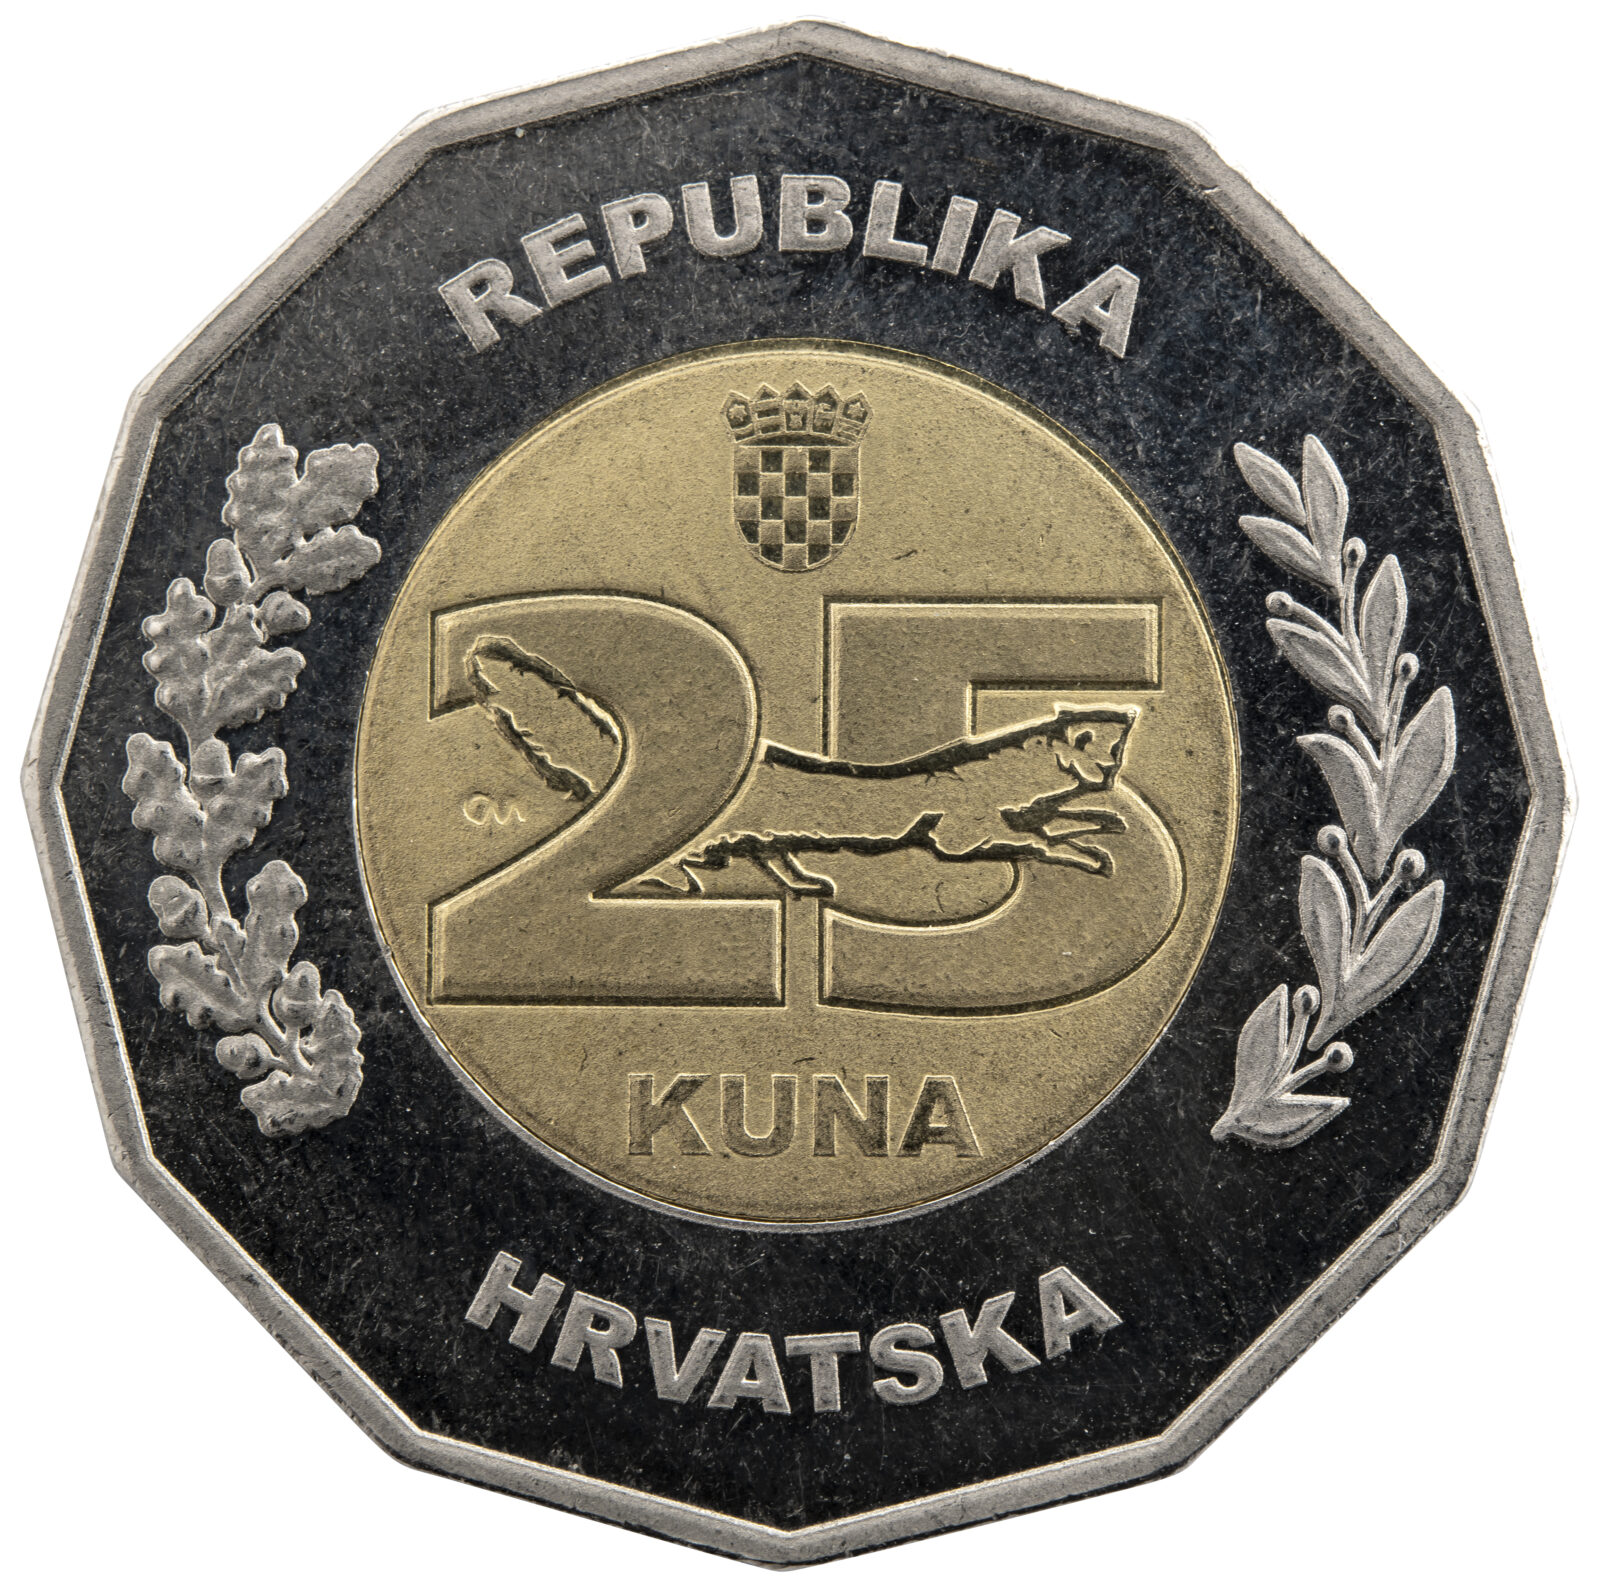 Foto: Hrvatska narodna banka, HNB